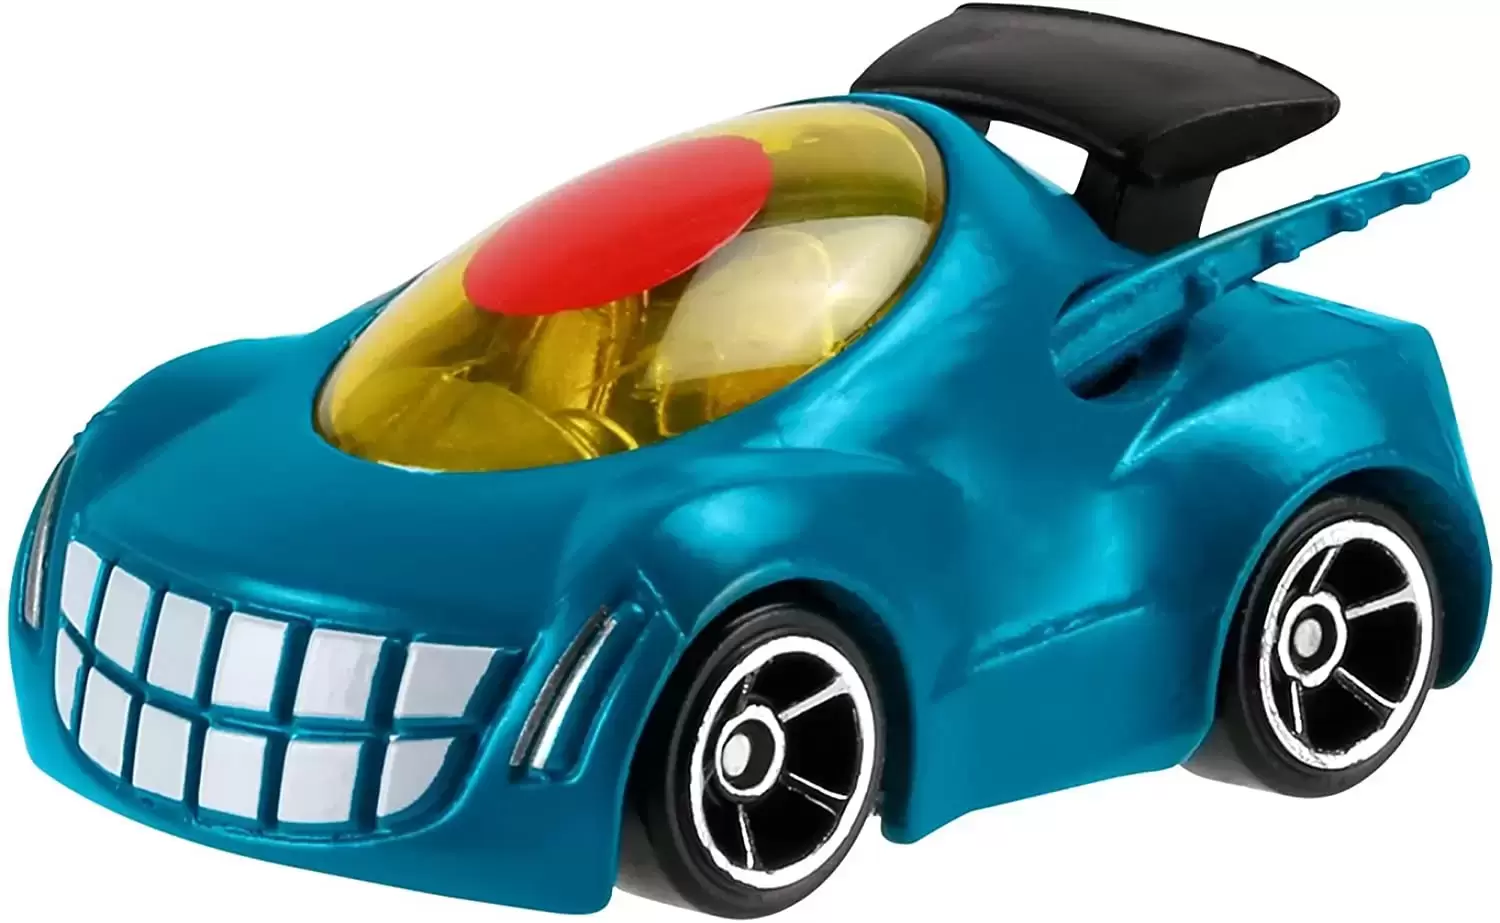 Hot Wheels Spongebob Character Cars - Plankton